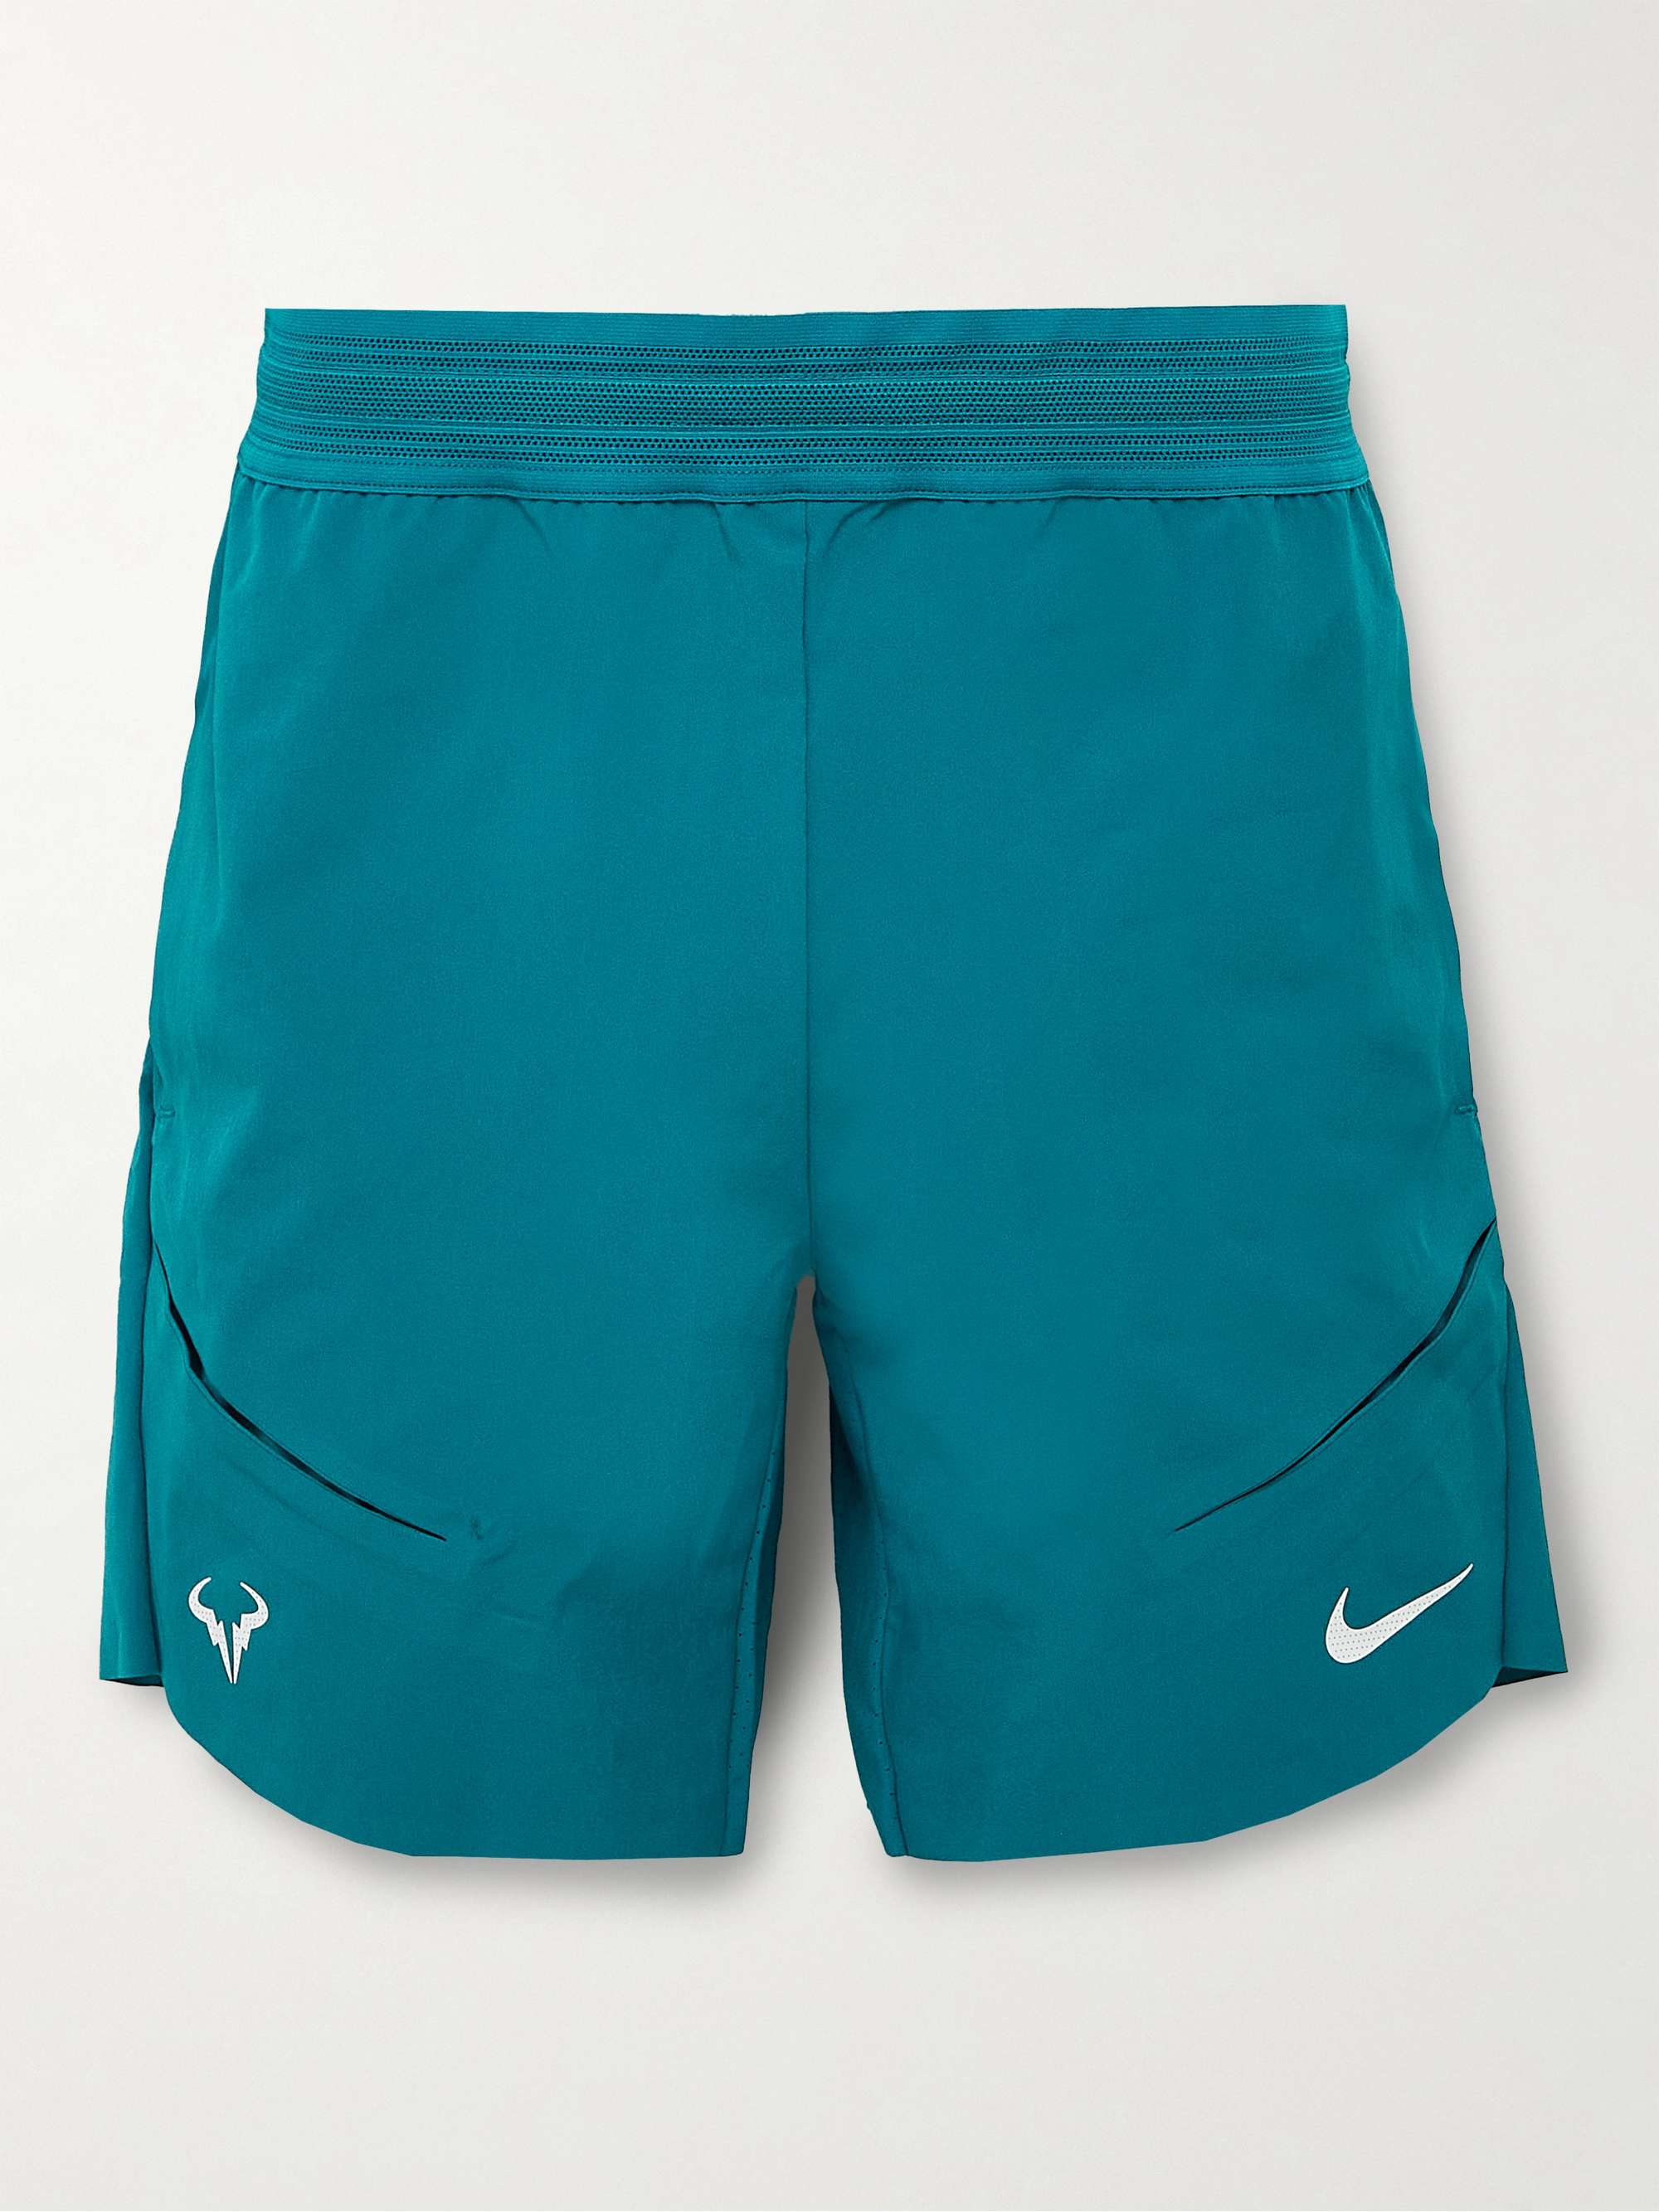 Memo Fade out controller Green NikeCourt Rafa Slim-Fit Dri-FIT ADV Tennis Shorts | NIKE TENNIS | MR  PORTER